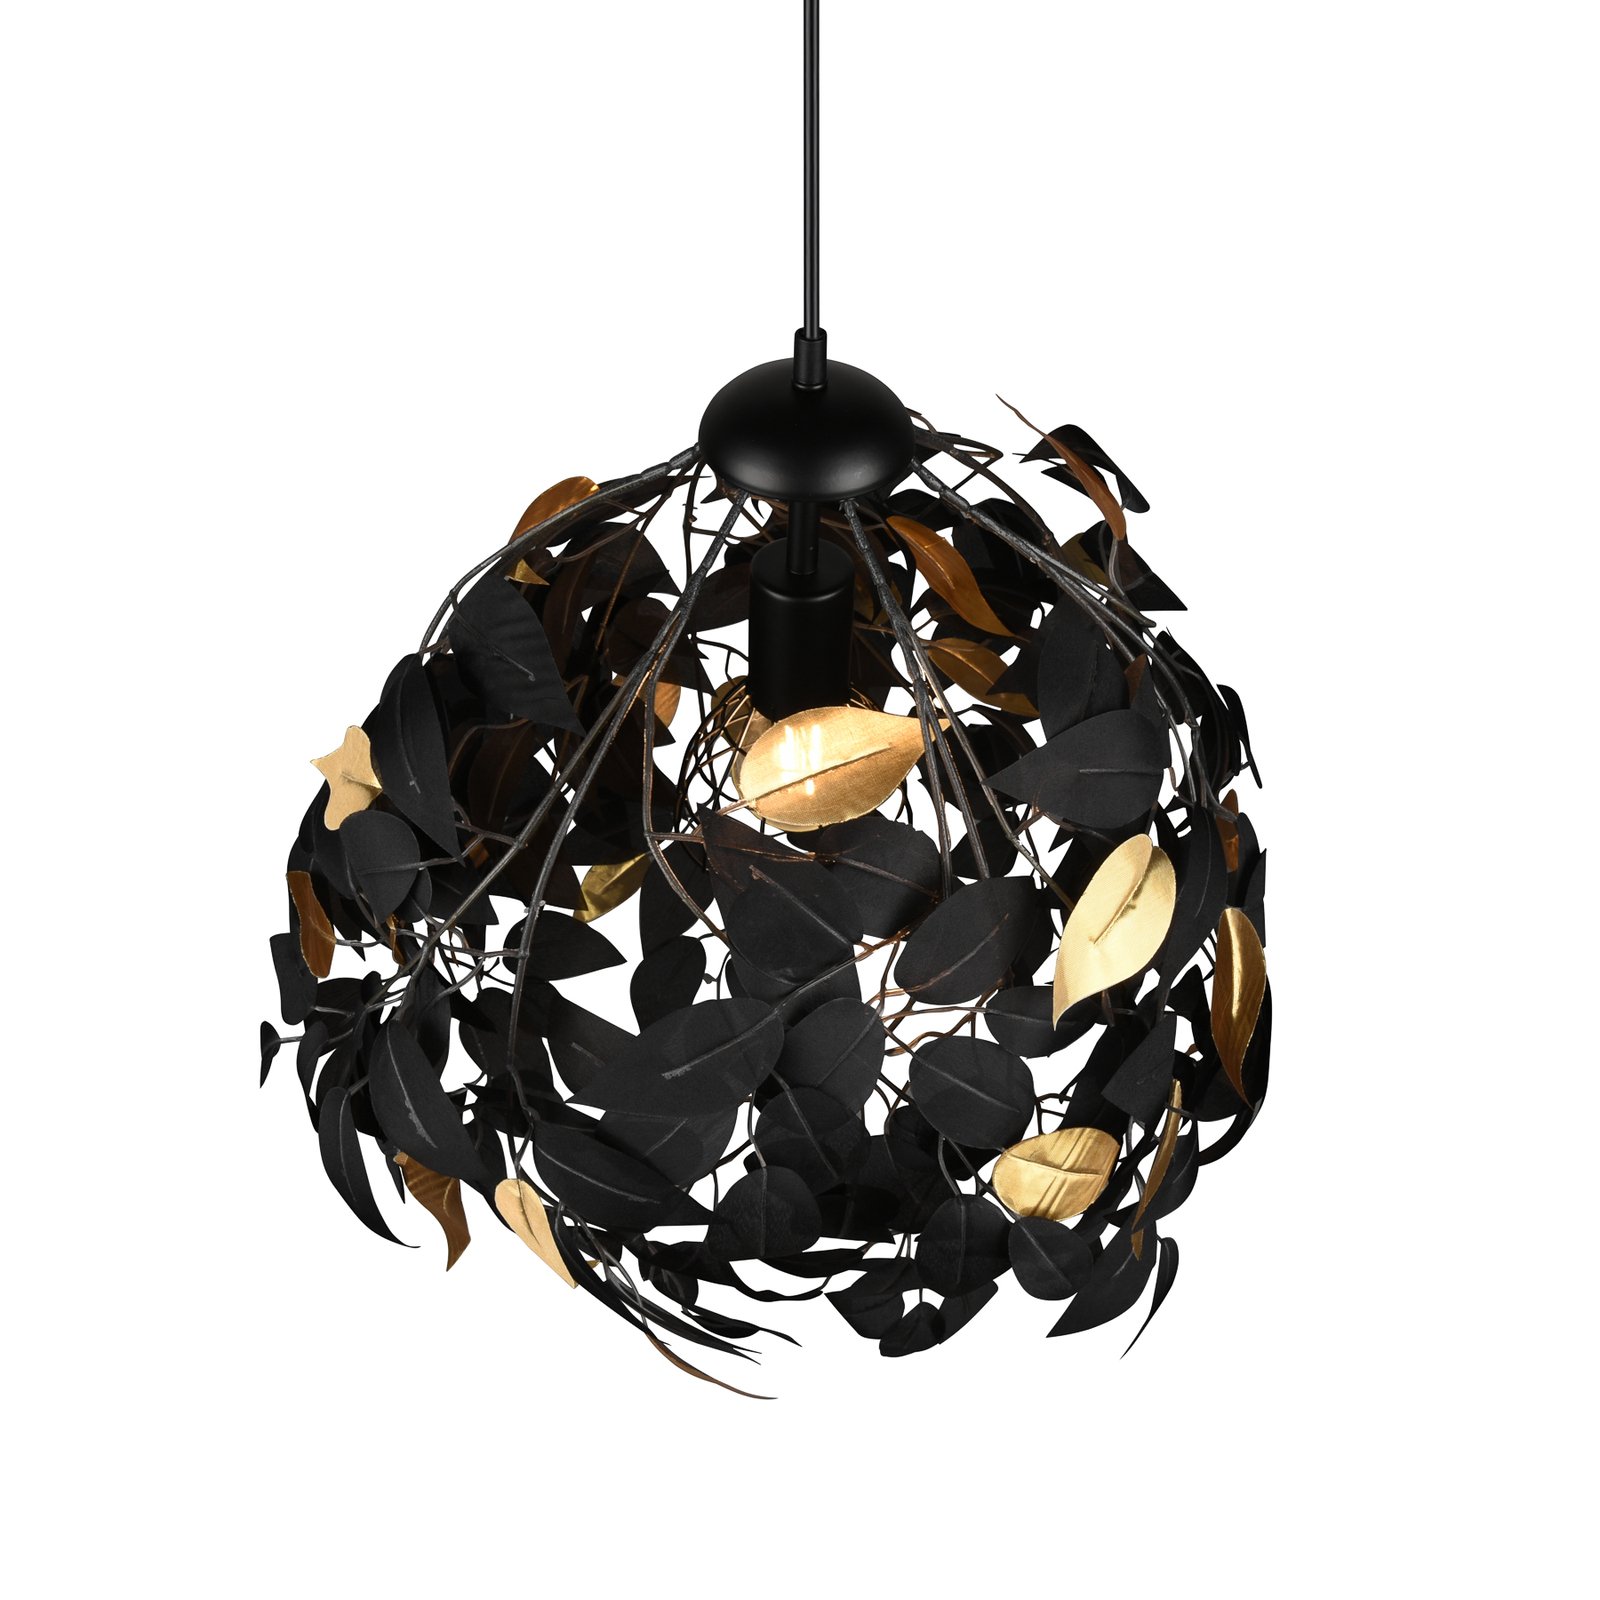 Leavy taklampa, svart/guld, Ø 38 cm, plast